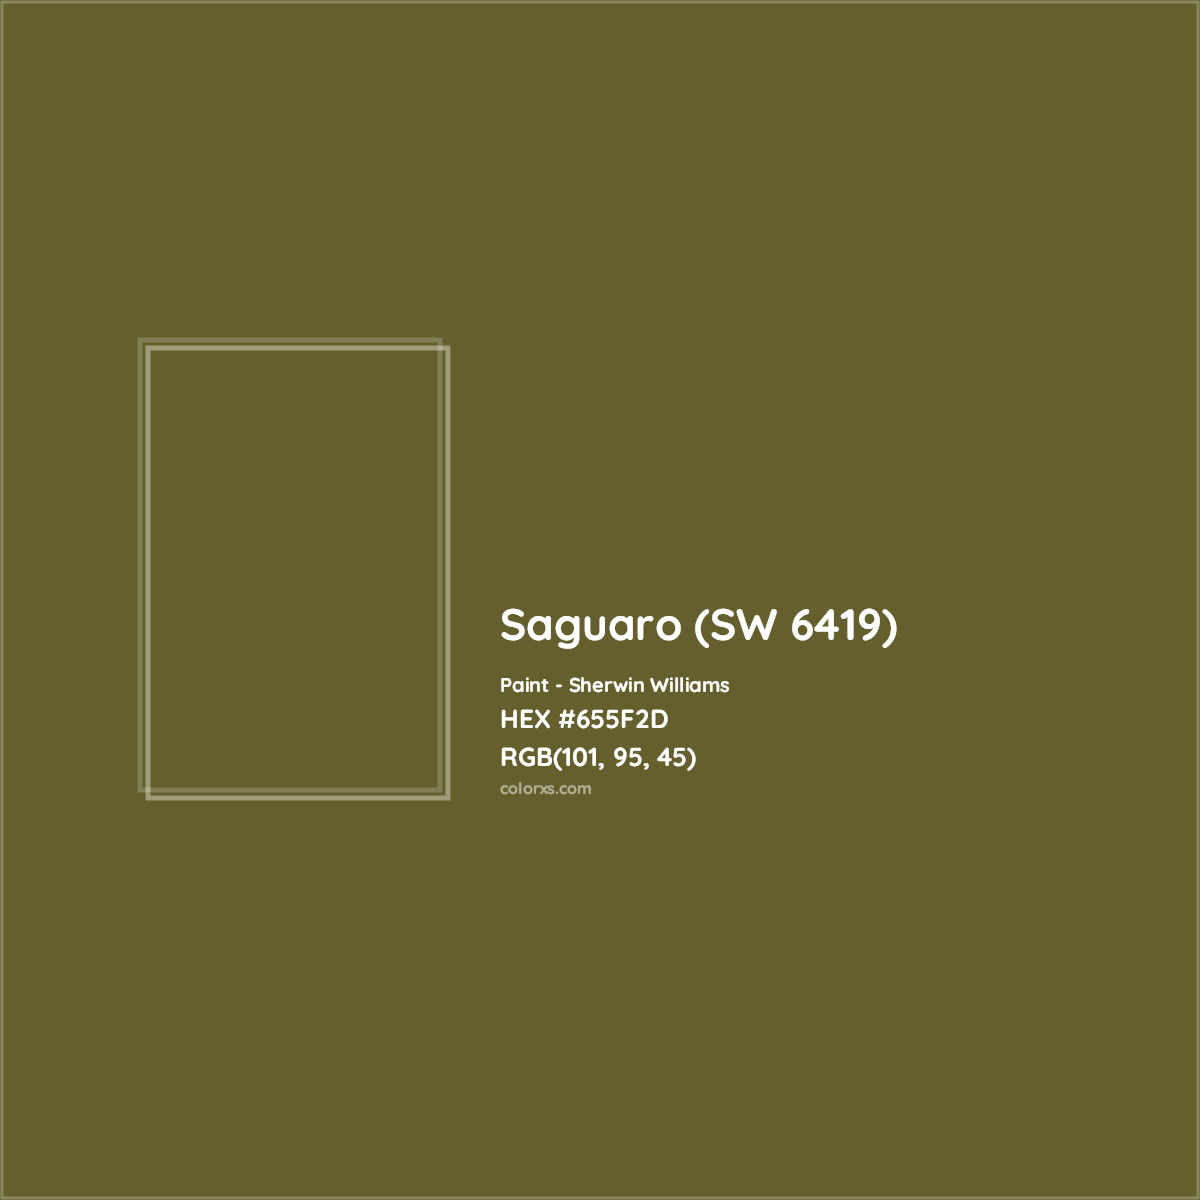 HEX #655F2D Saguaro (SW 6419) Paint Sherwin Williams - Color Code